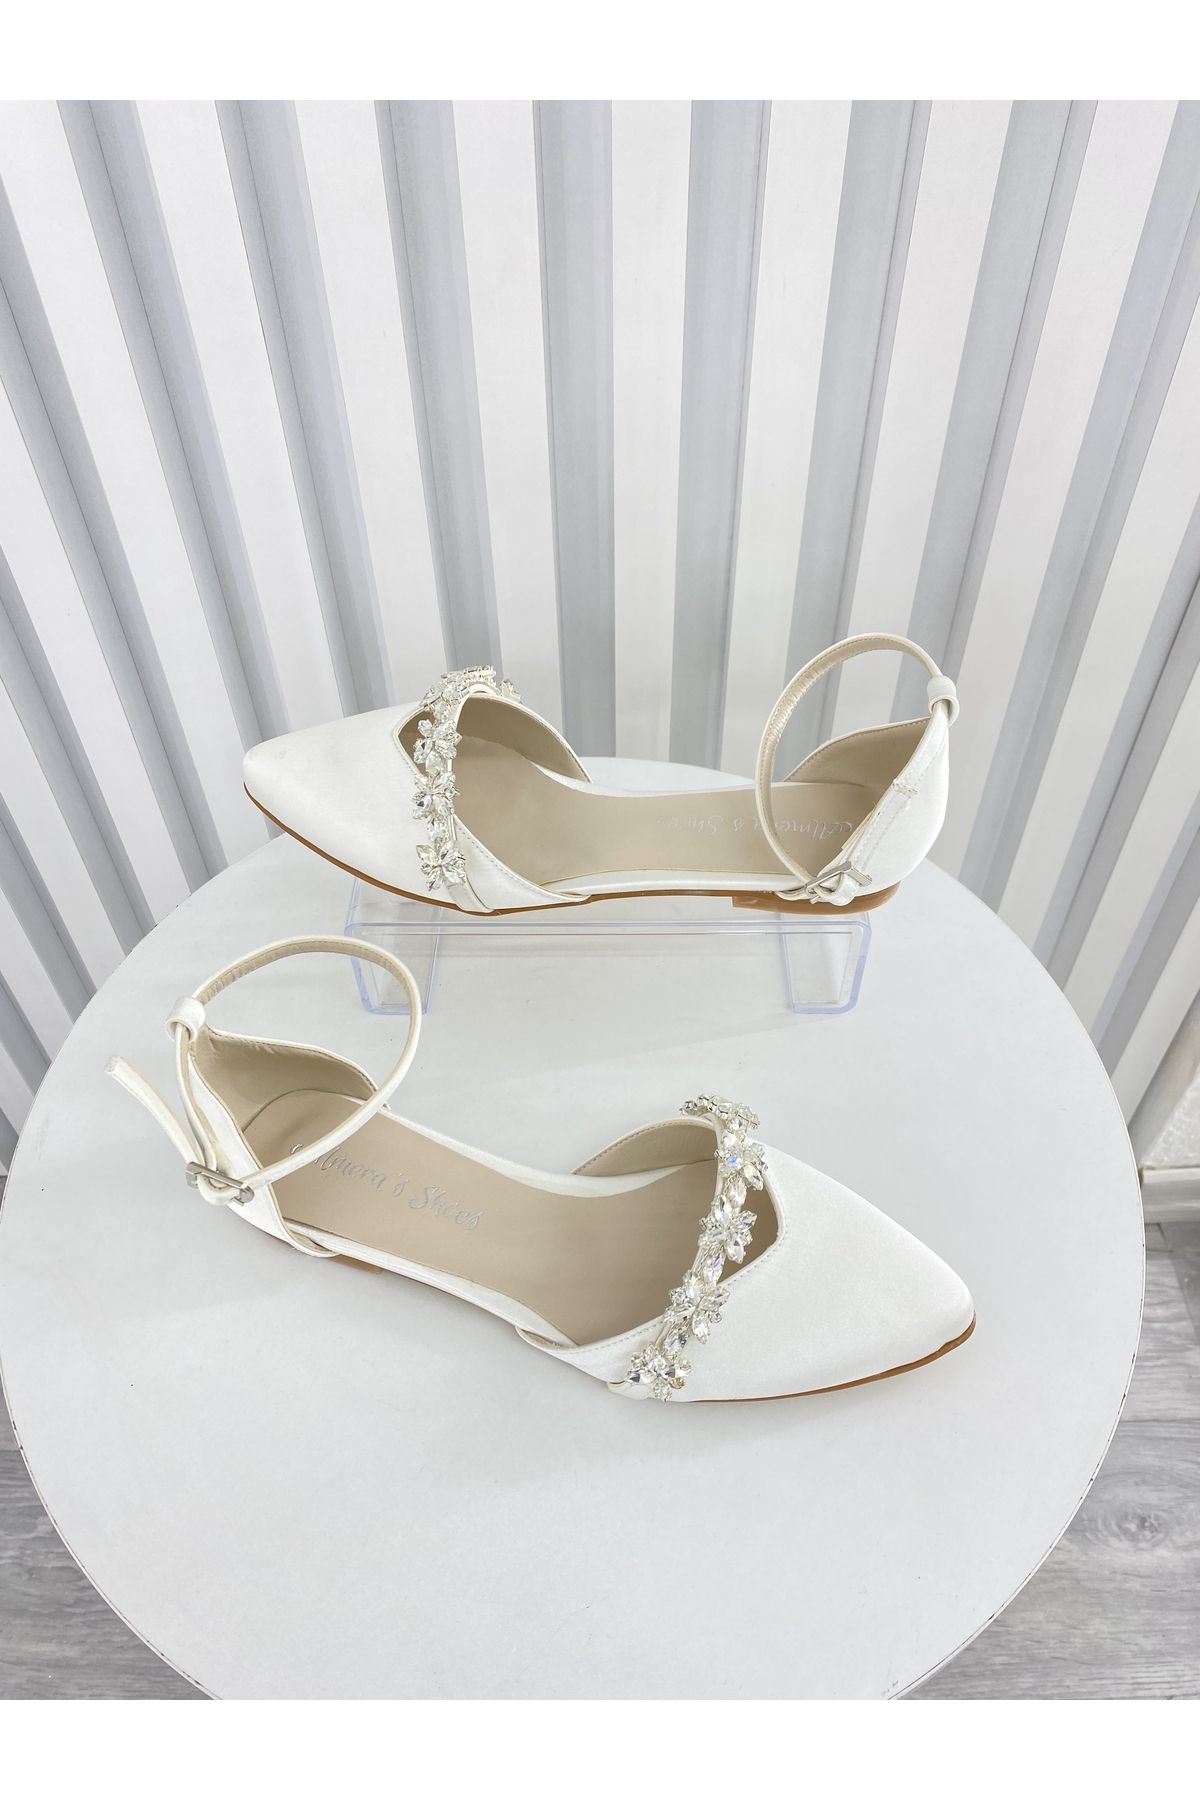 Almera's Shoes Beyaz Saten Taş Detaylı Babet